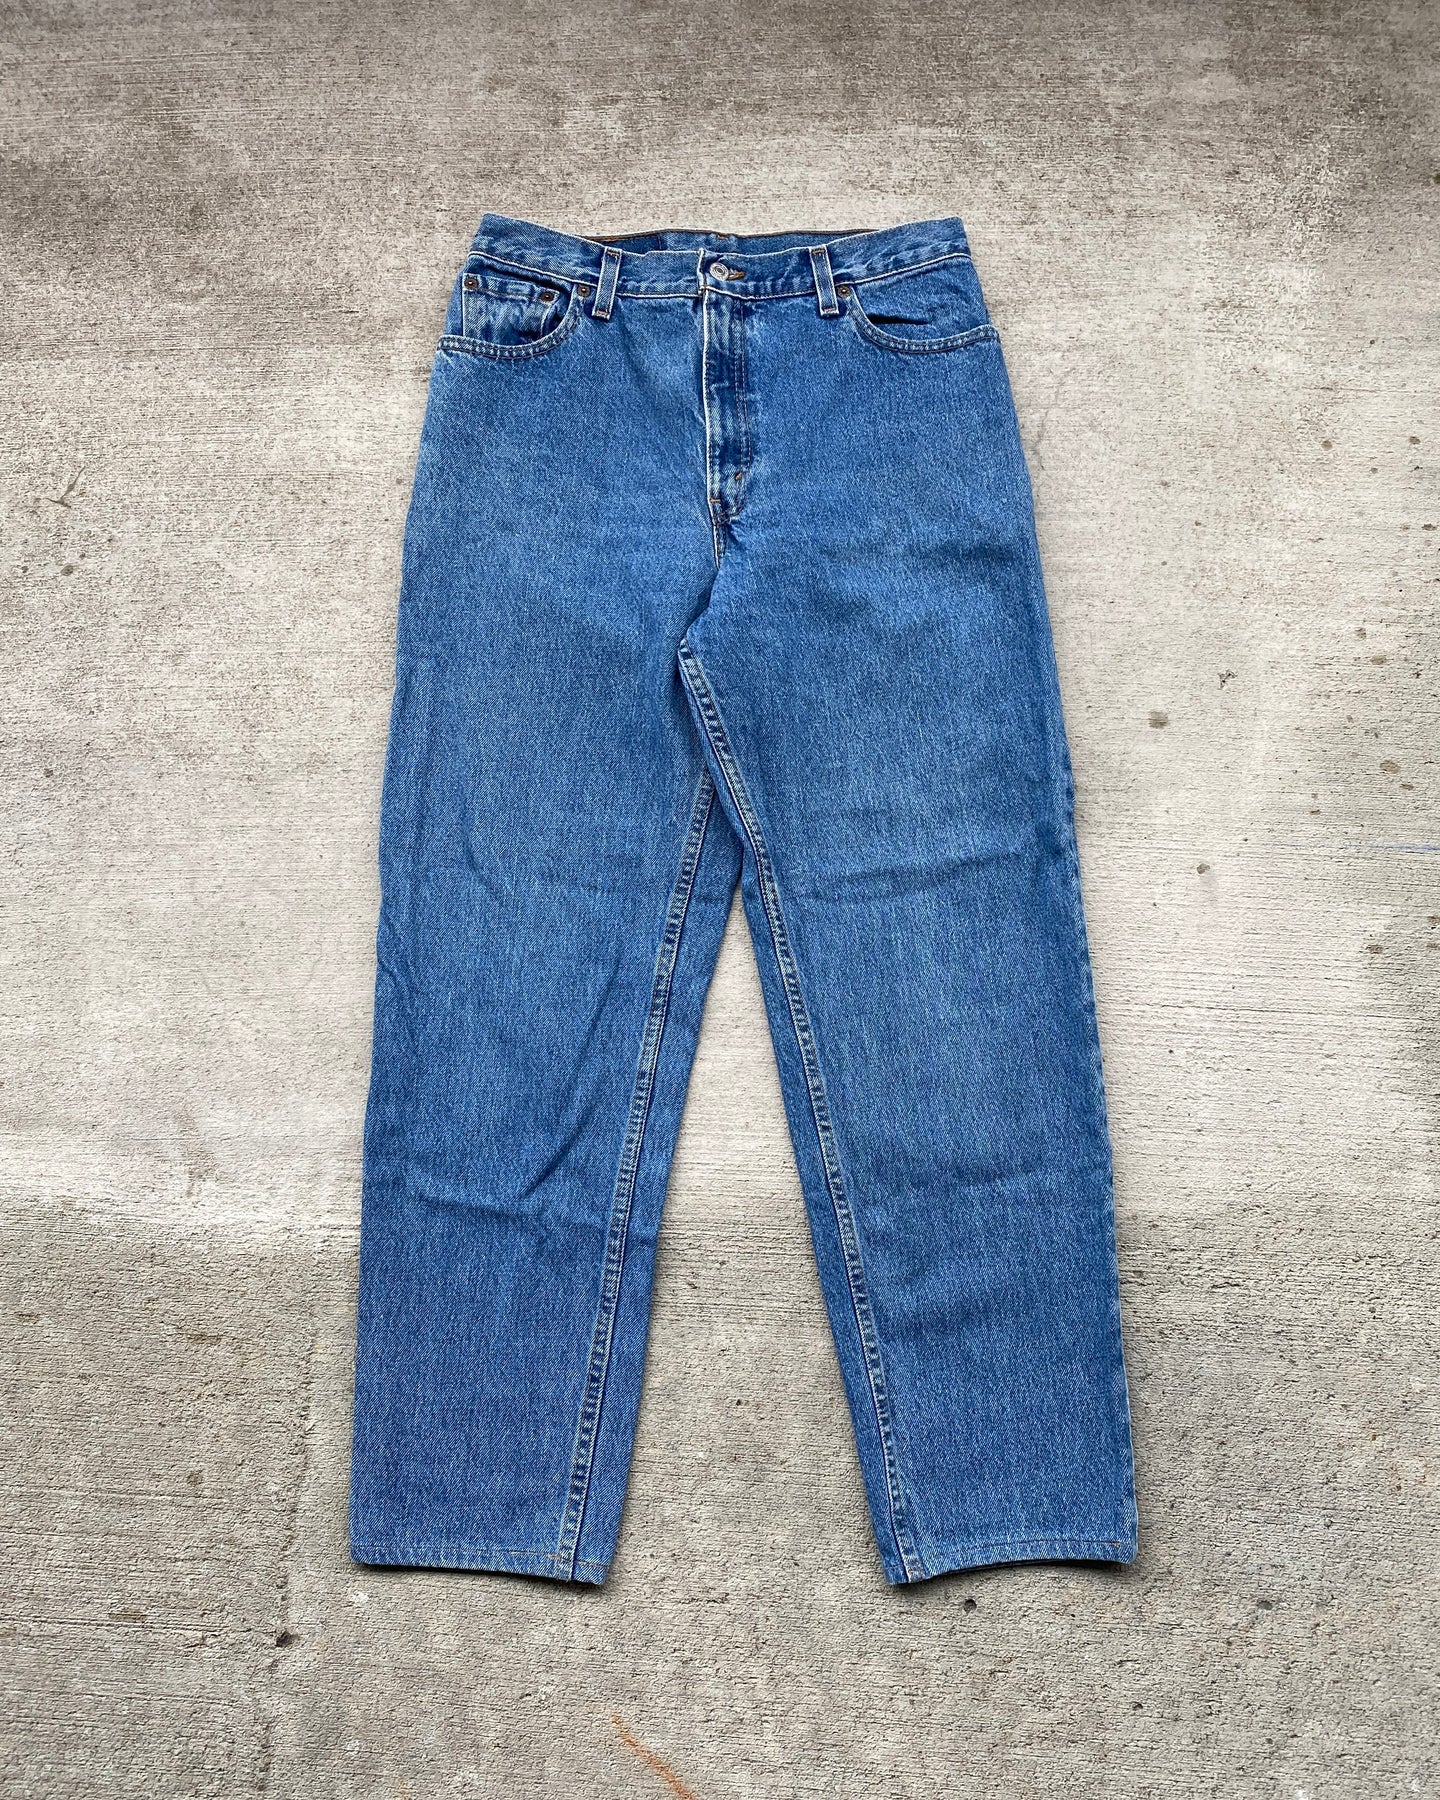 1990s Levi's 550 Mid Wash Jeans - Size 31 x 29